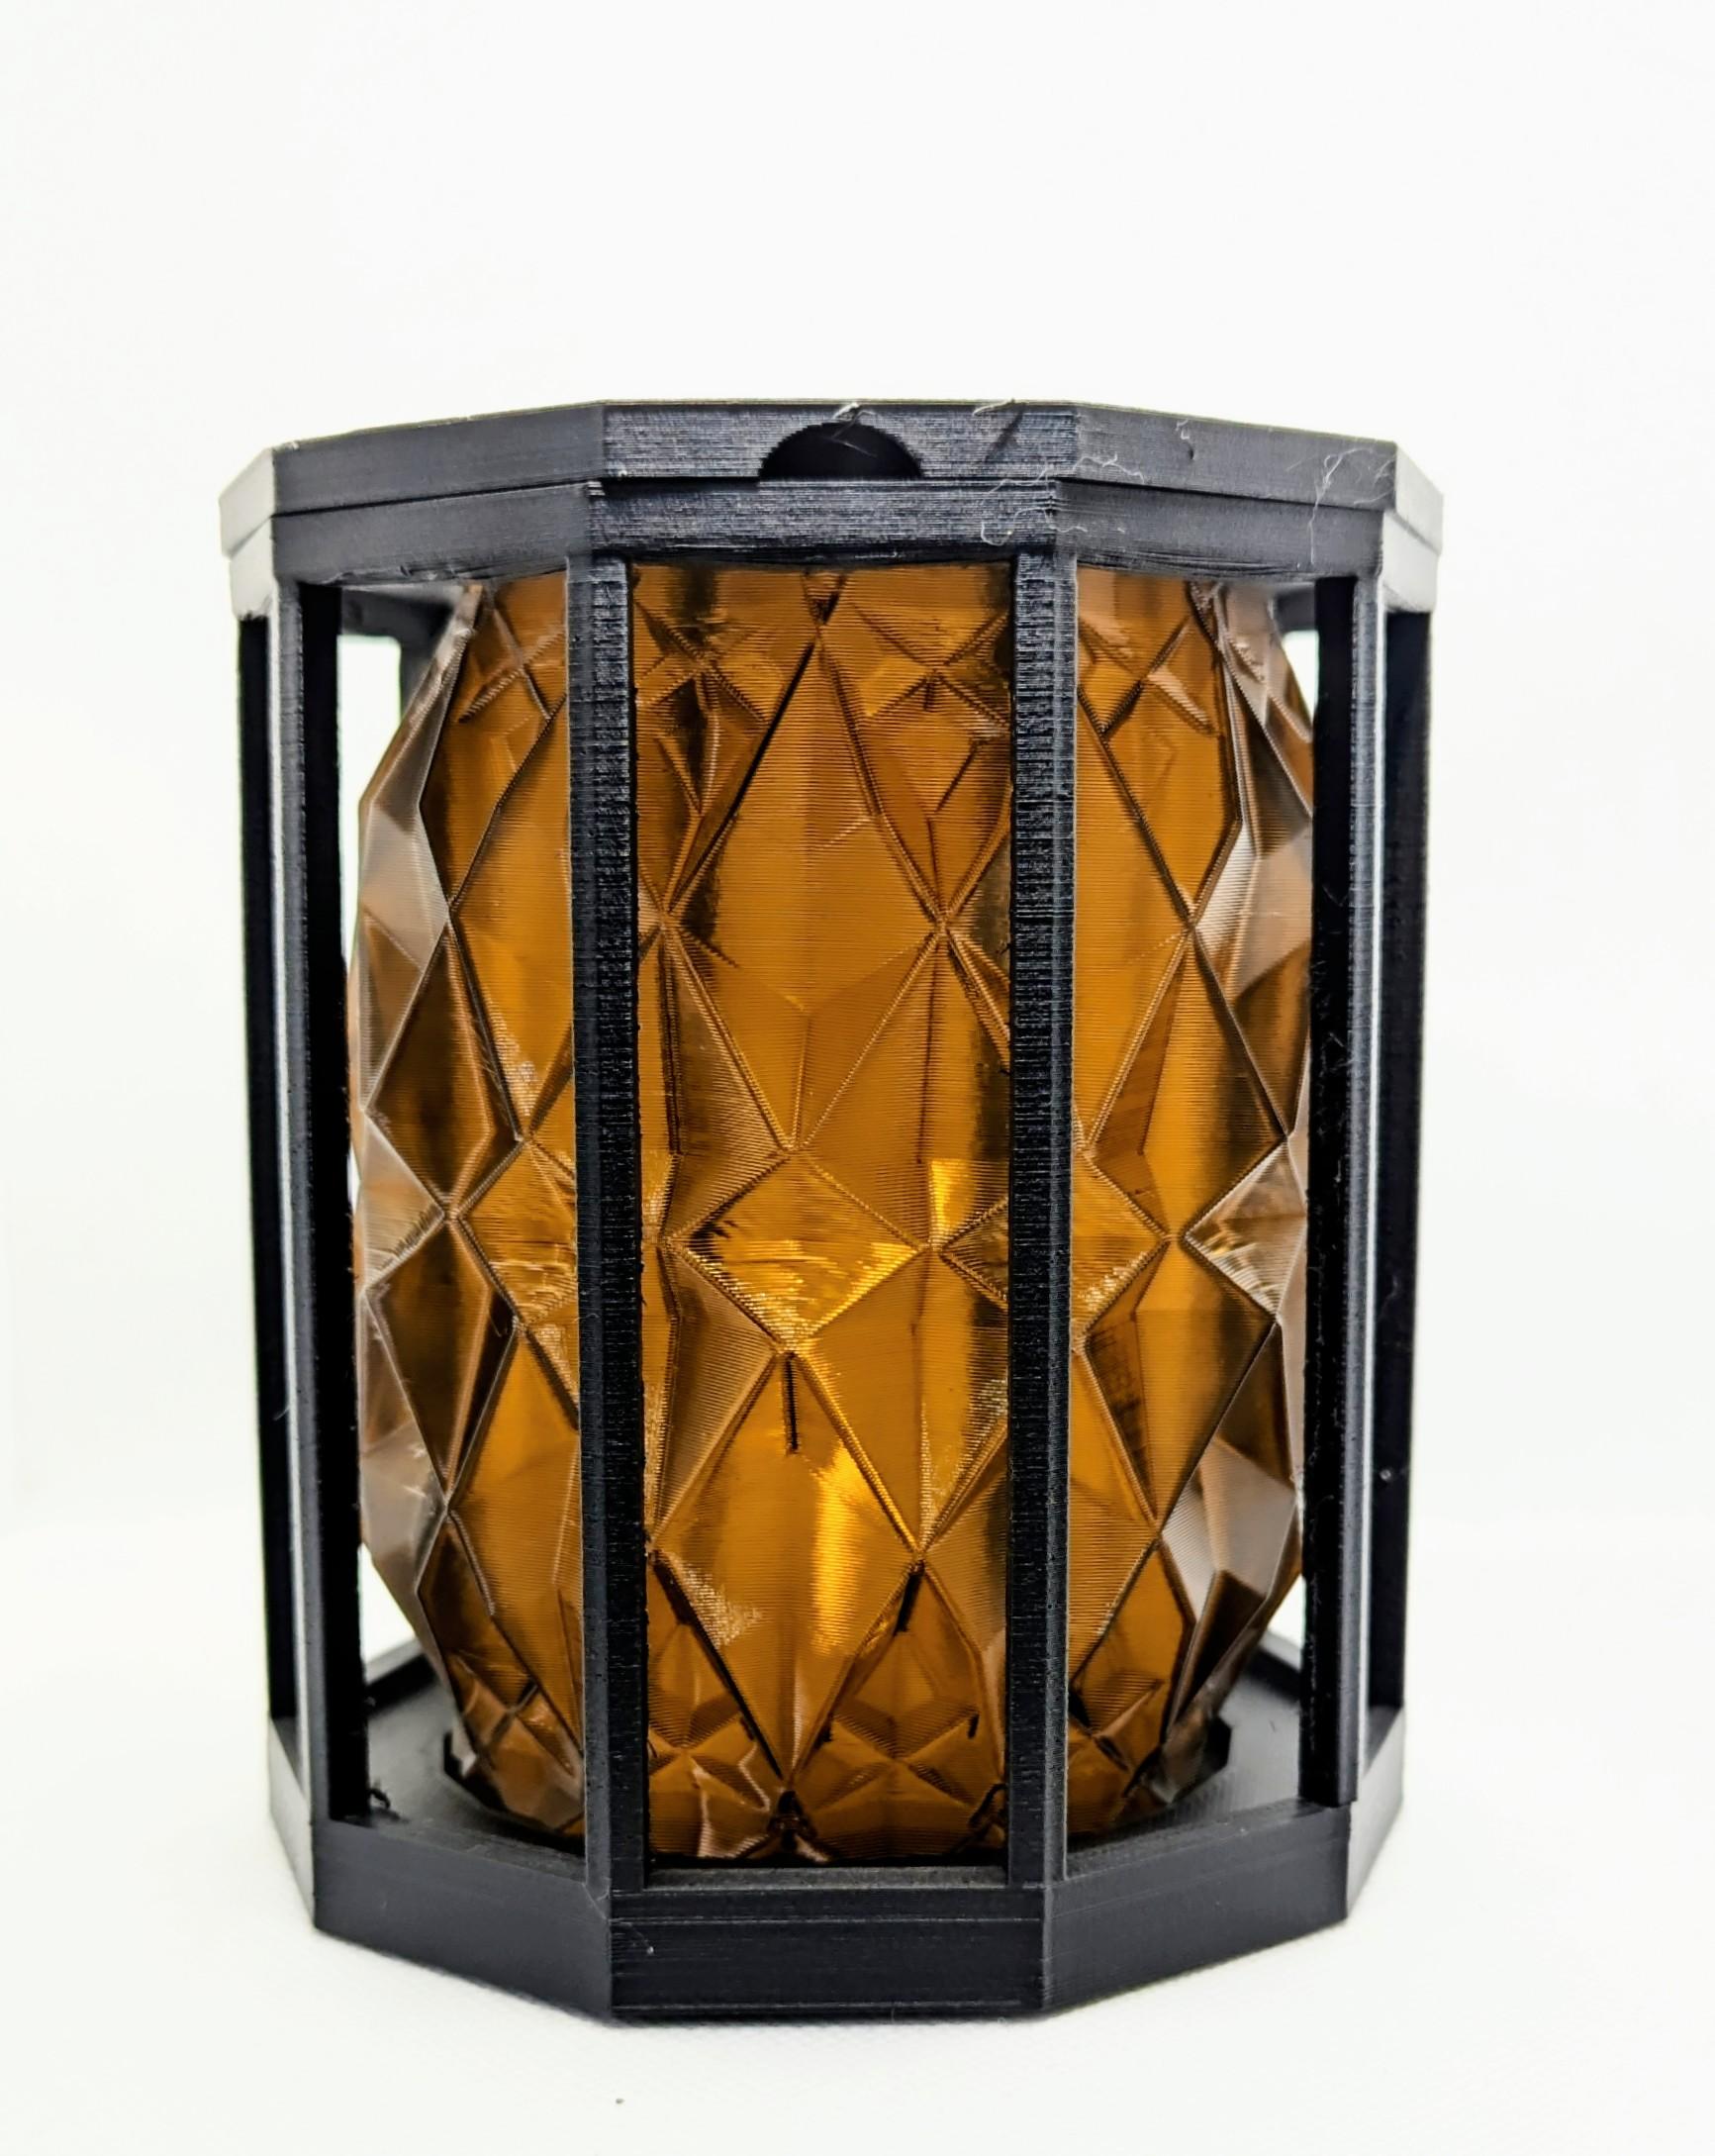 Lantern 3d model